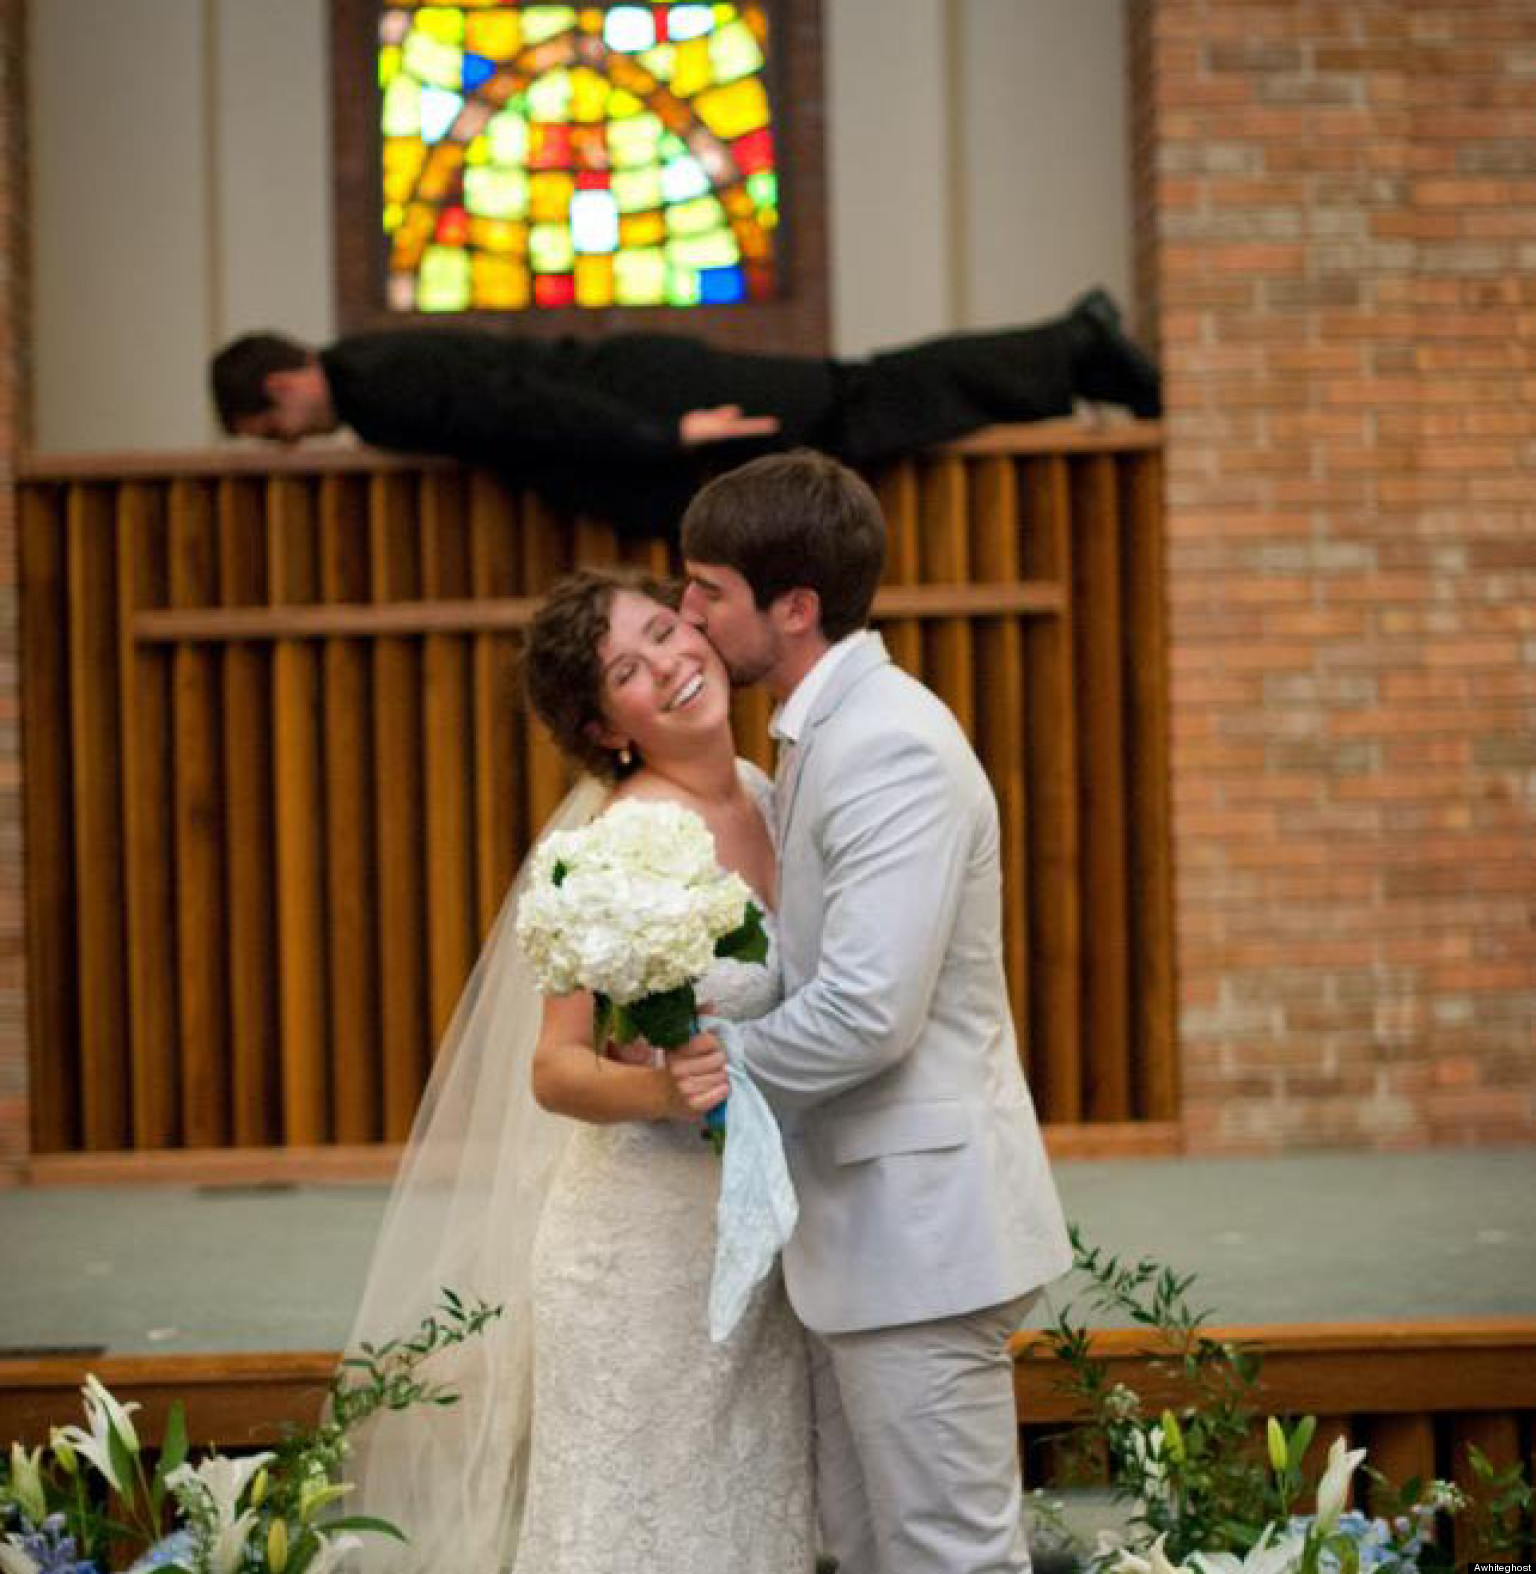 Funny Wedding Photos 10 Shots That Will Make You Giggle (PHOTOS